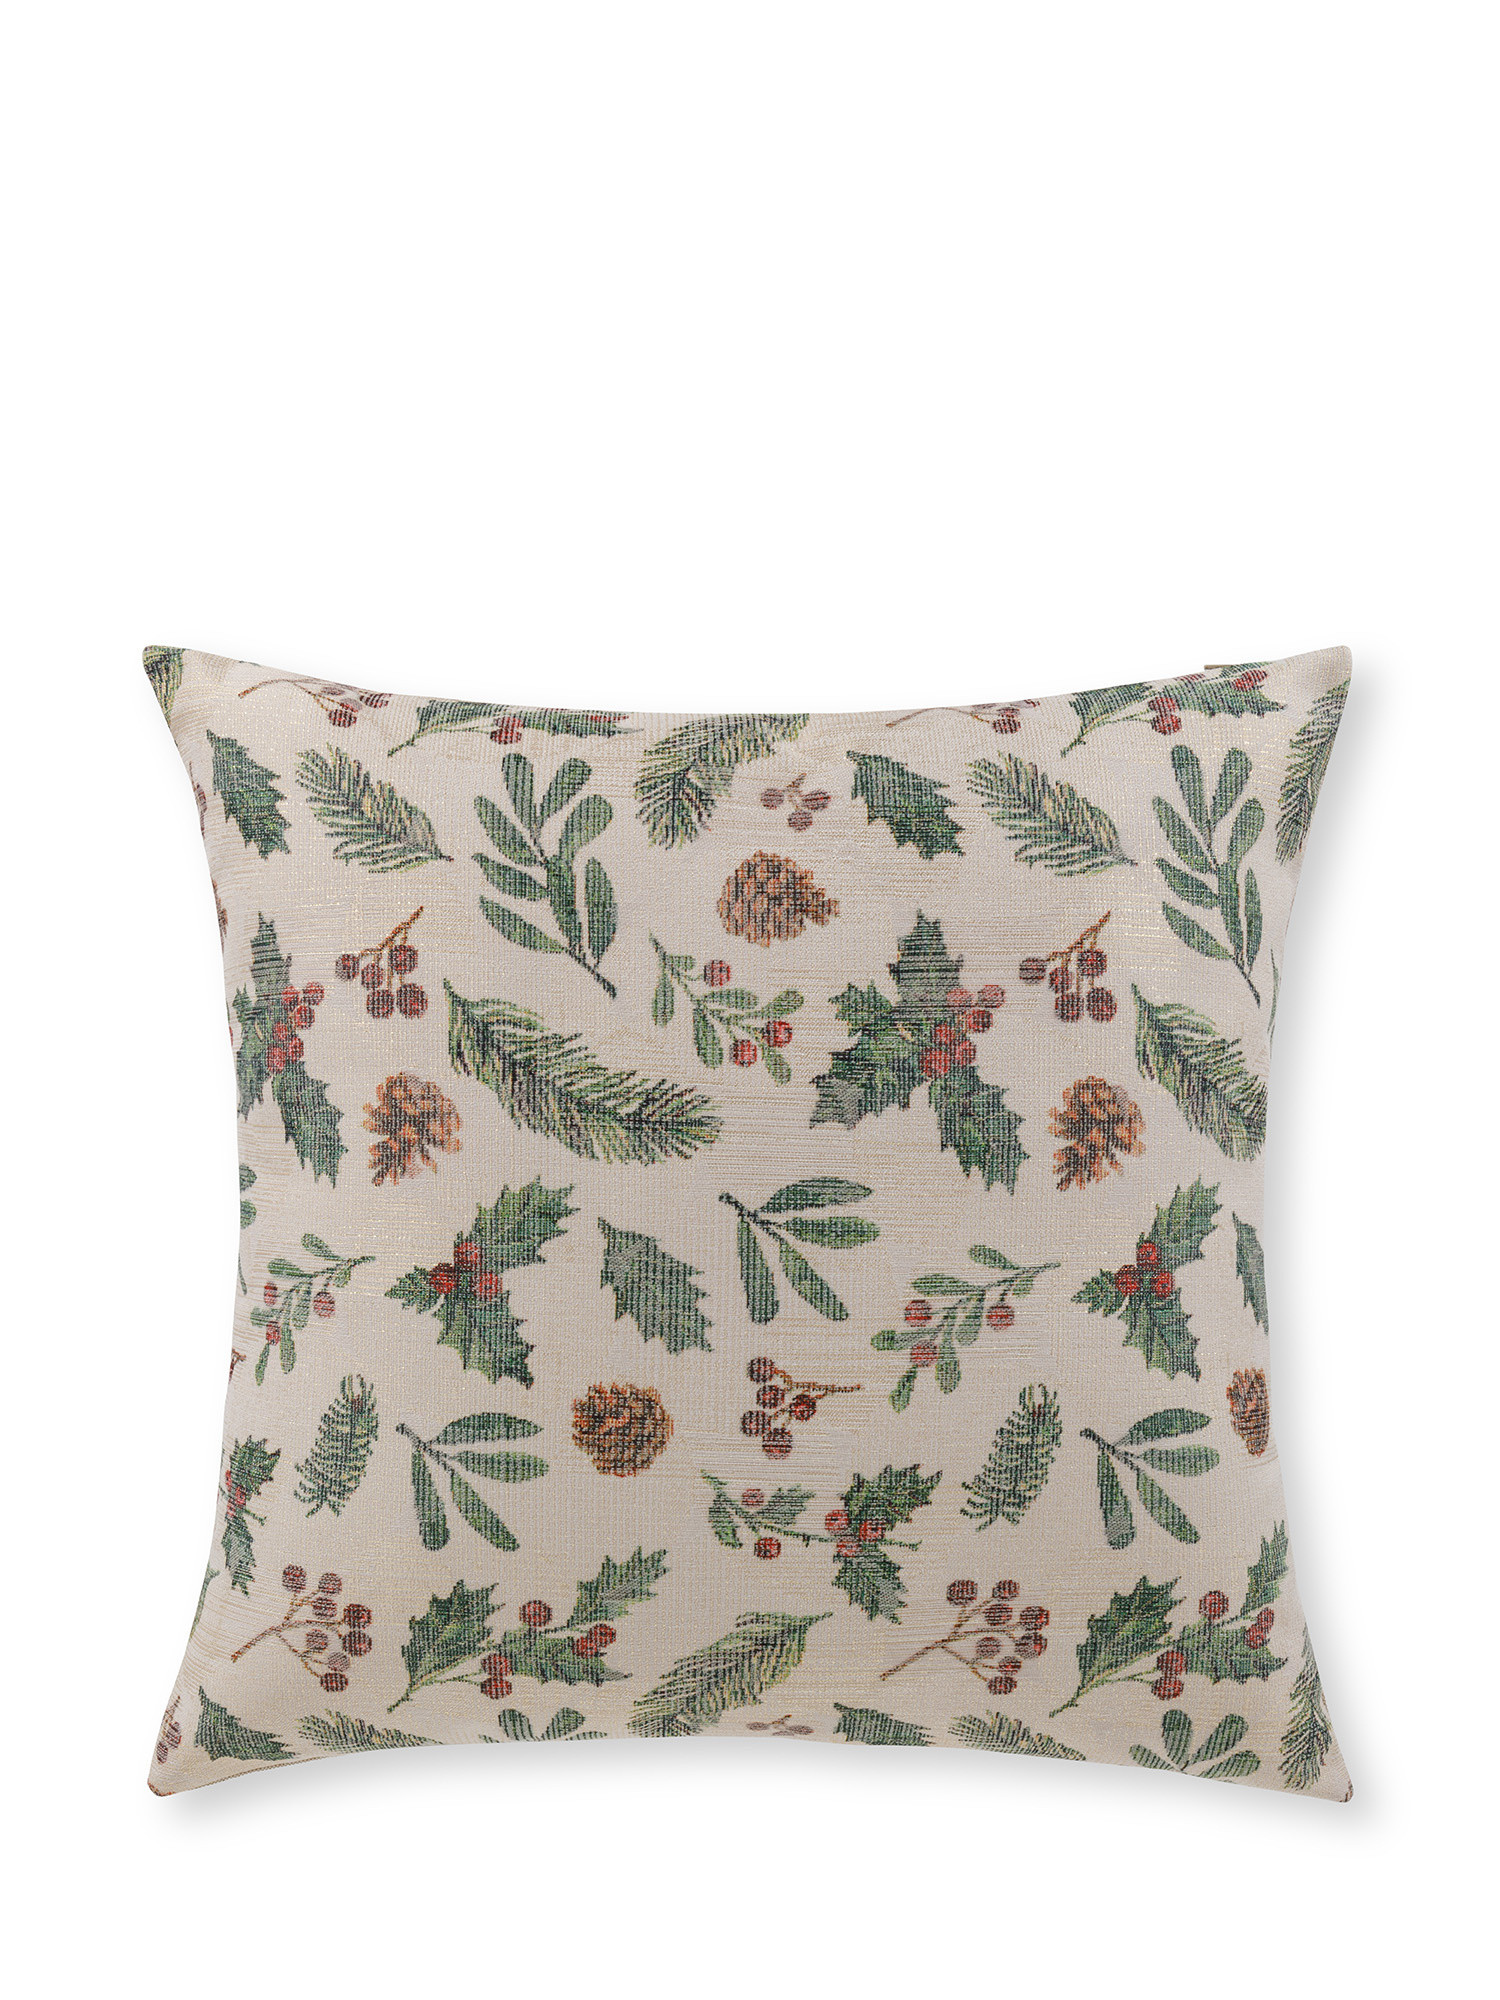 Cuscino in tessuto jacquard lurex motivo allover pigne e foglie 45x45 cm, Multicolor, large image number 0